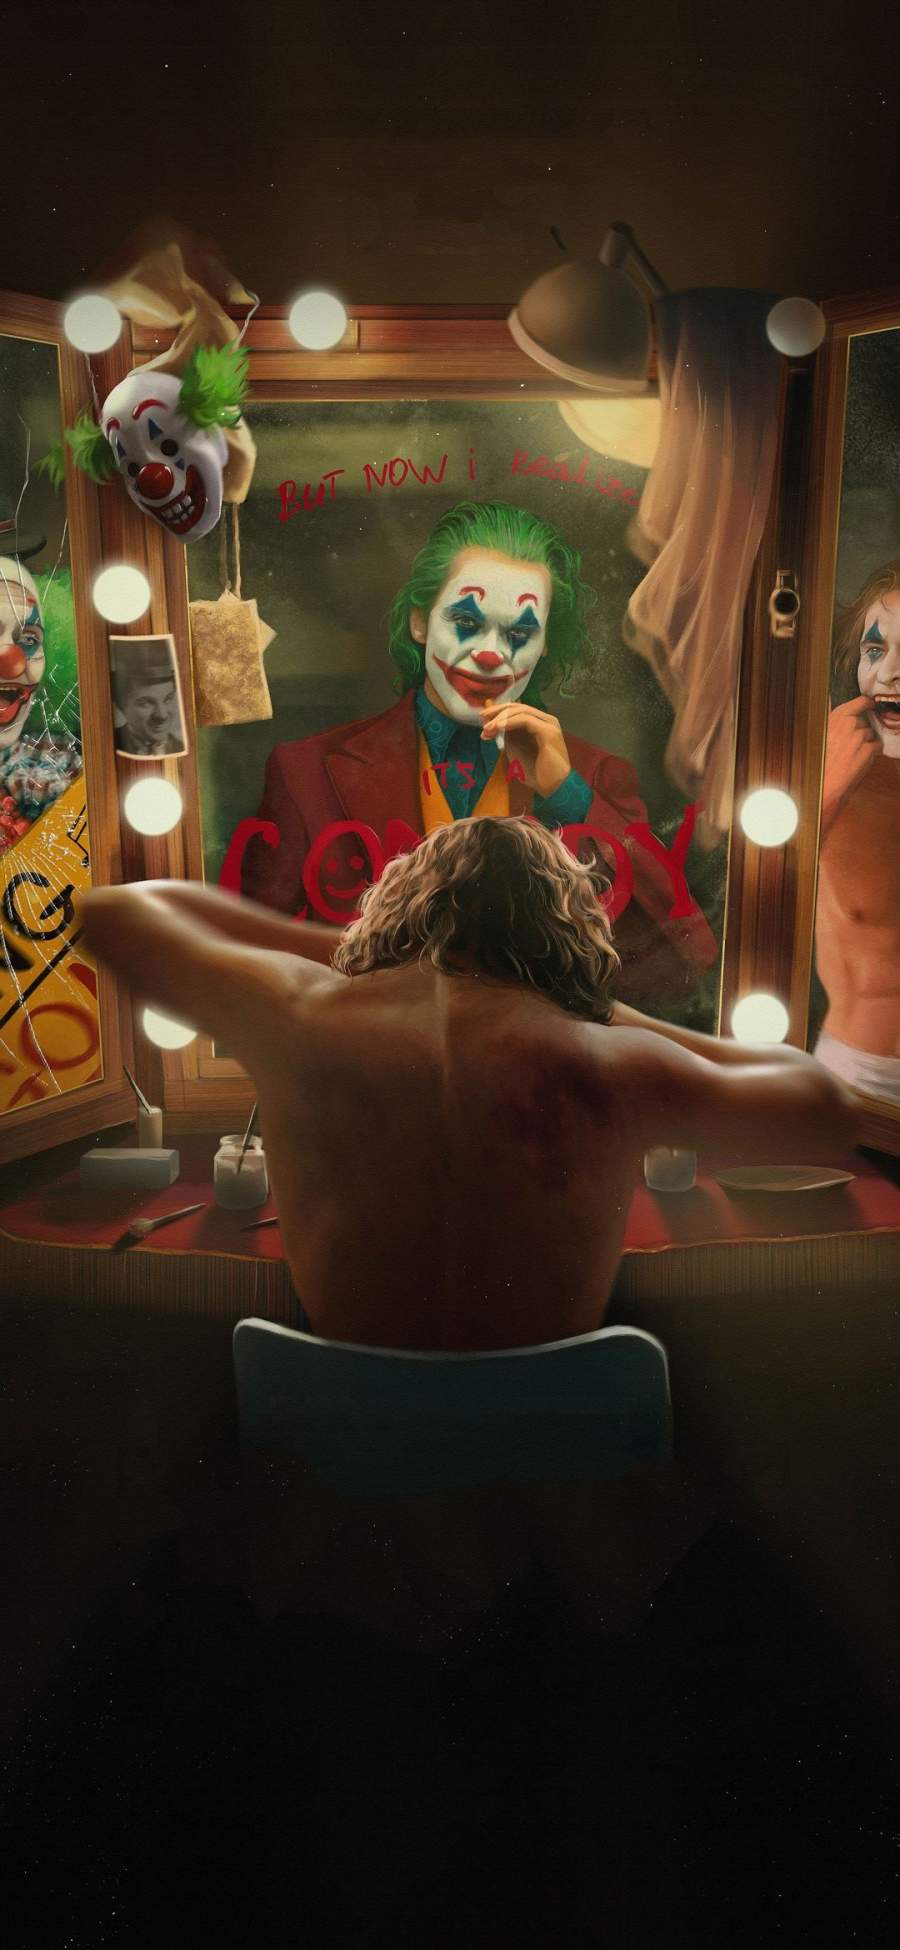 Joker Getting Ready iPhone Wallpaper